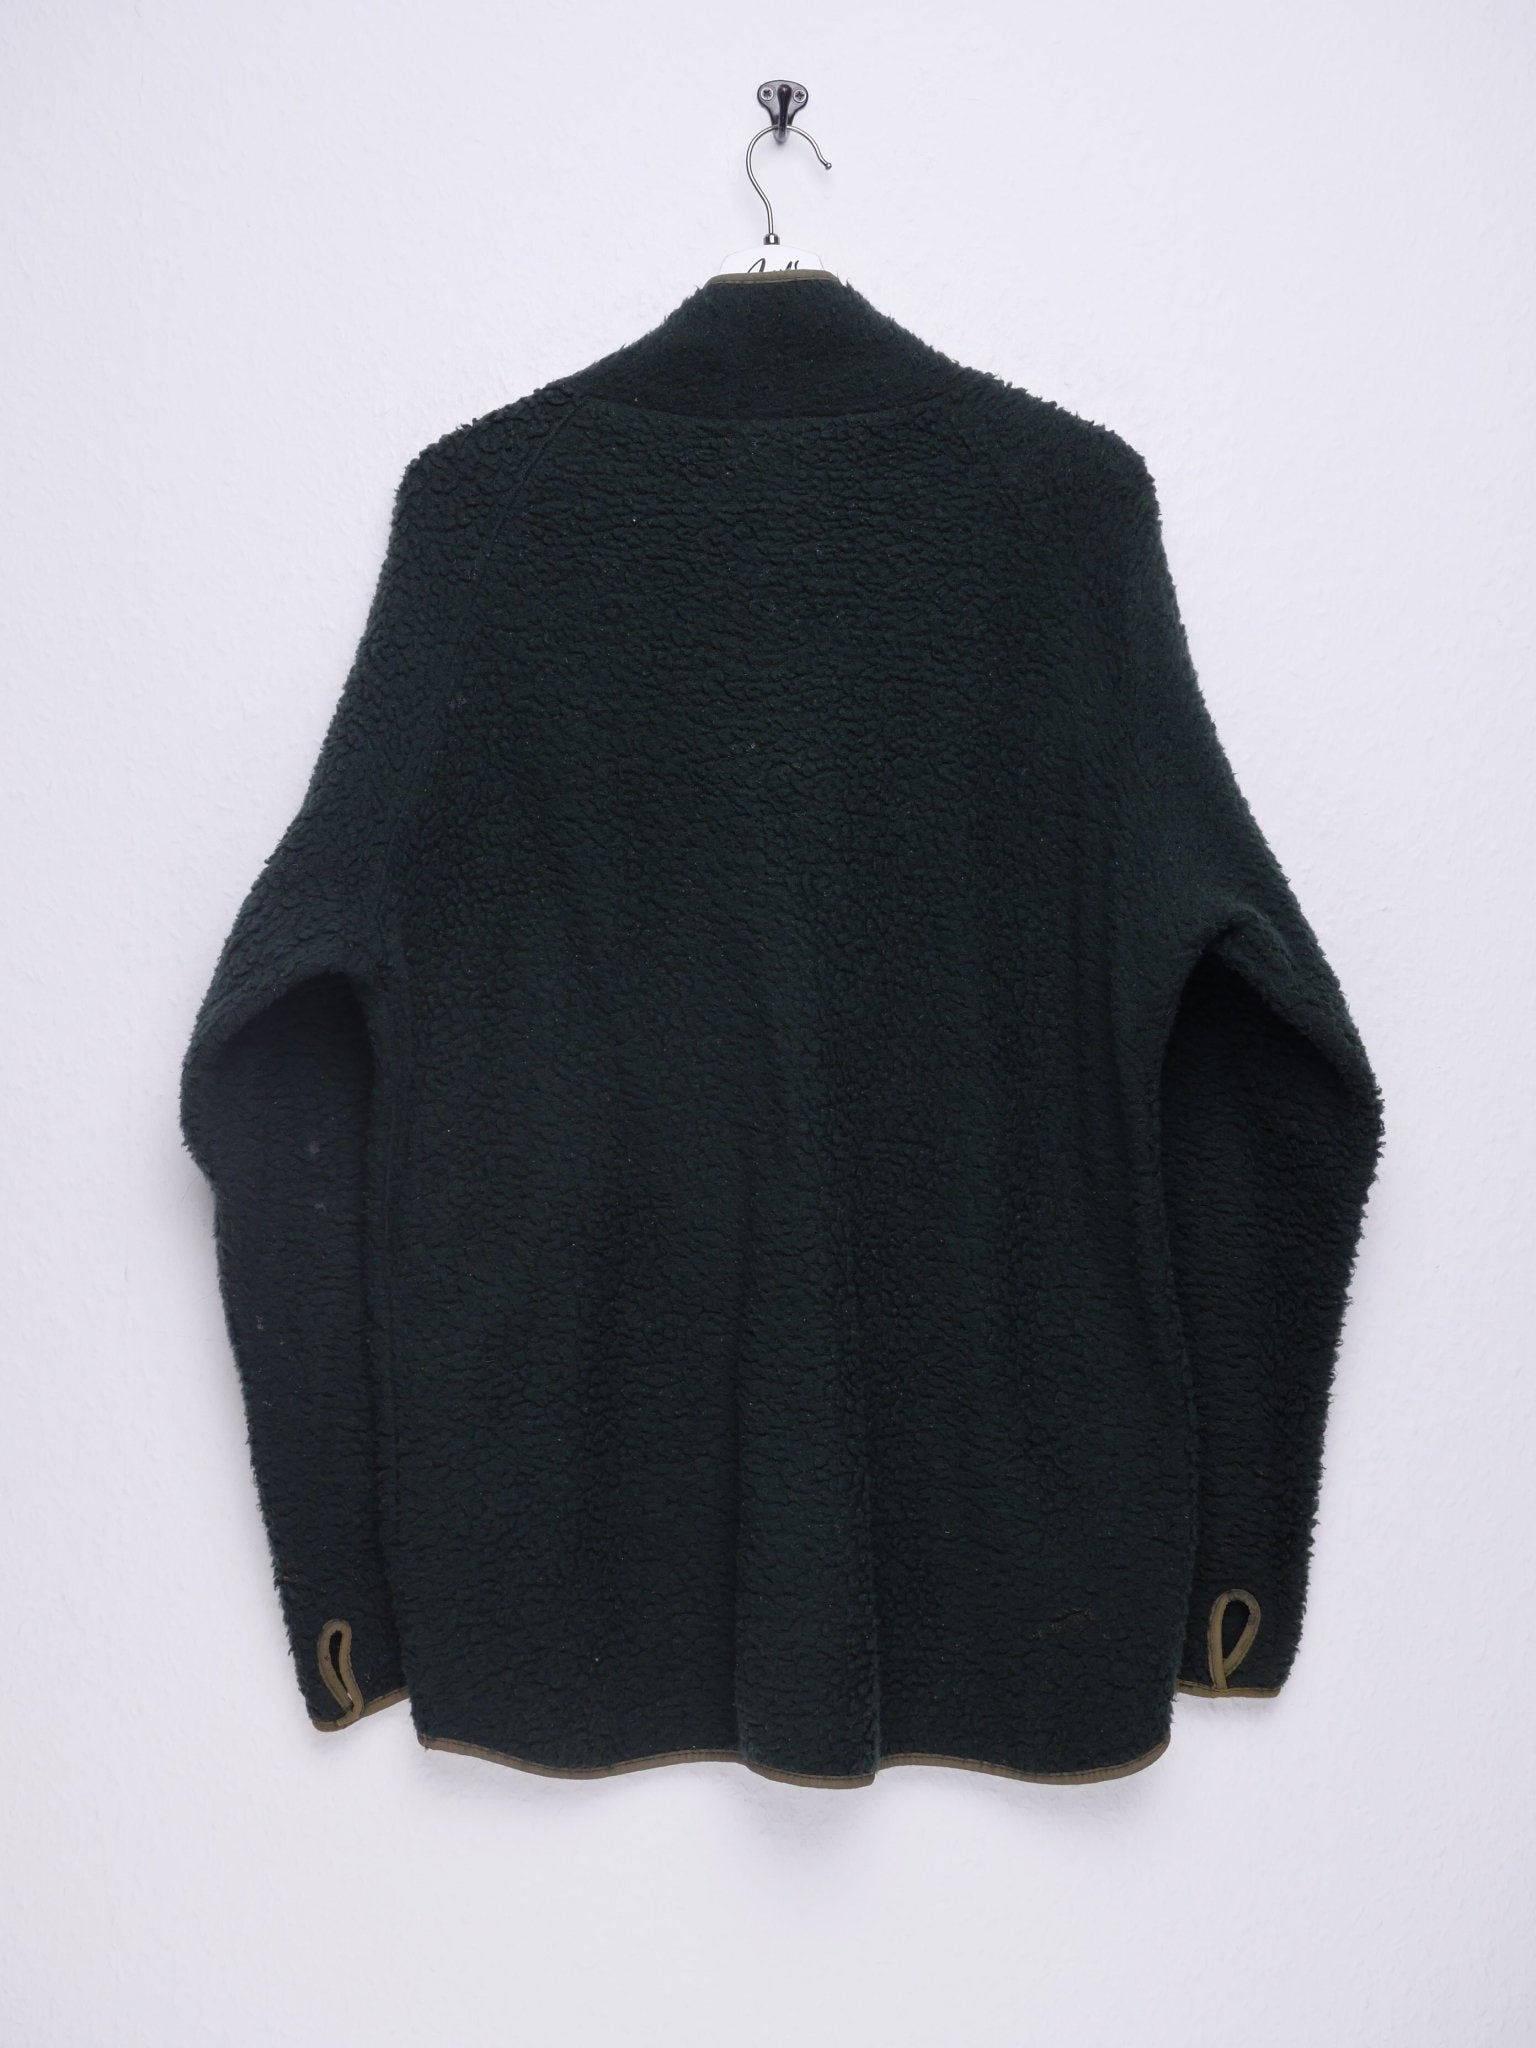 Helly Hansen embroidered Logo green Fleece Zip Sweater - Peeces